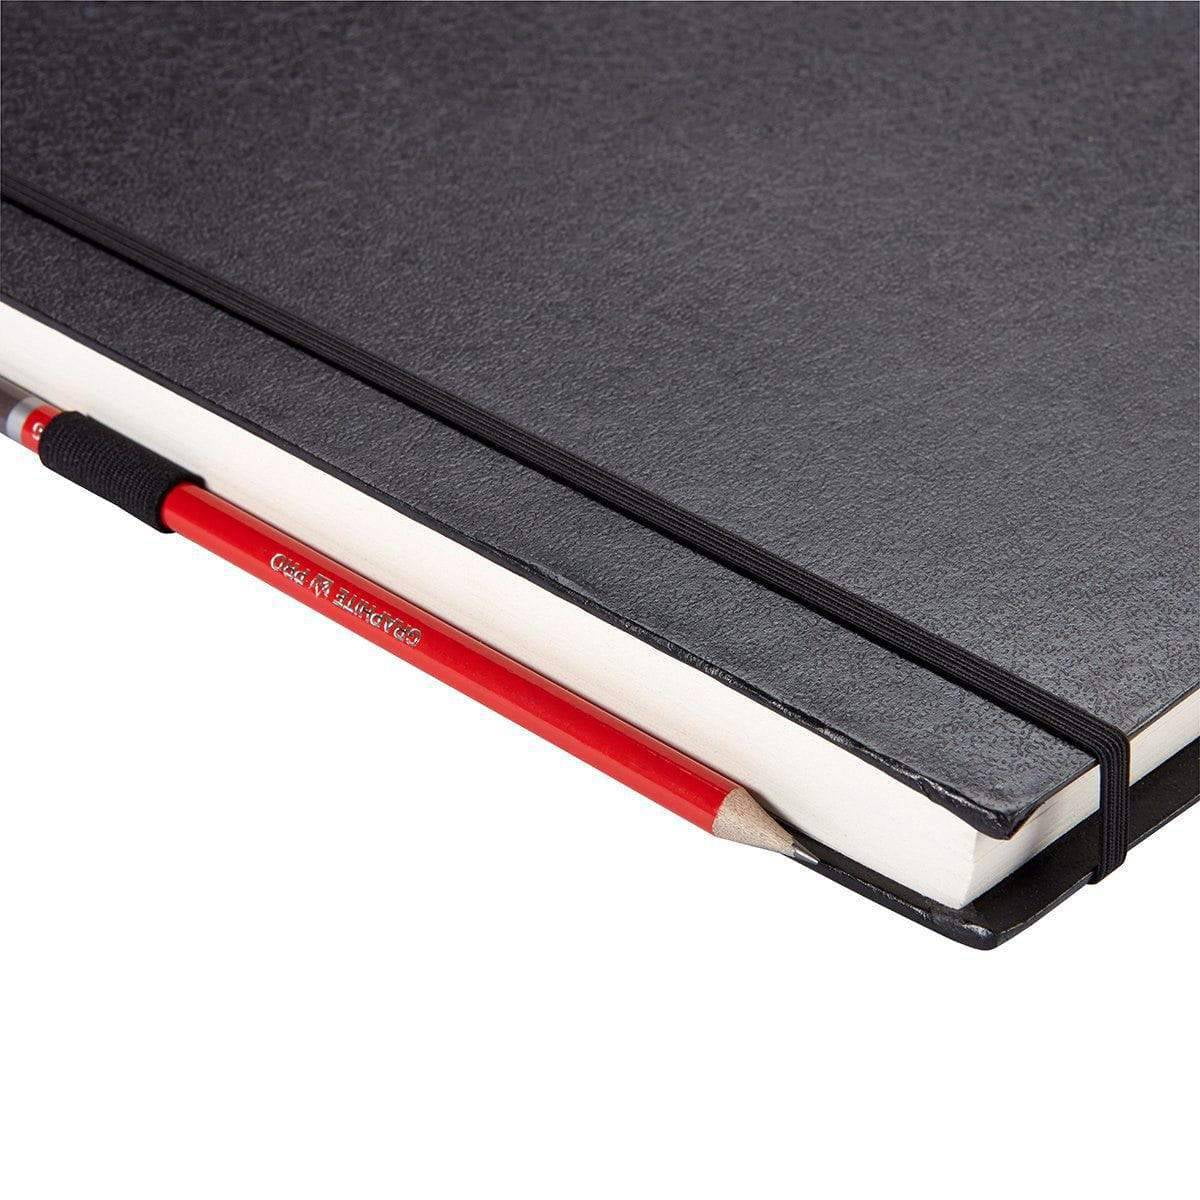 Black Hard Cover Drawing Pad by Artist's Loft™ 8.5 x 11